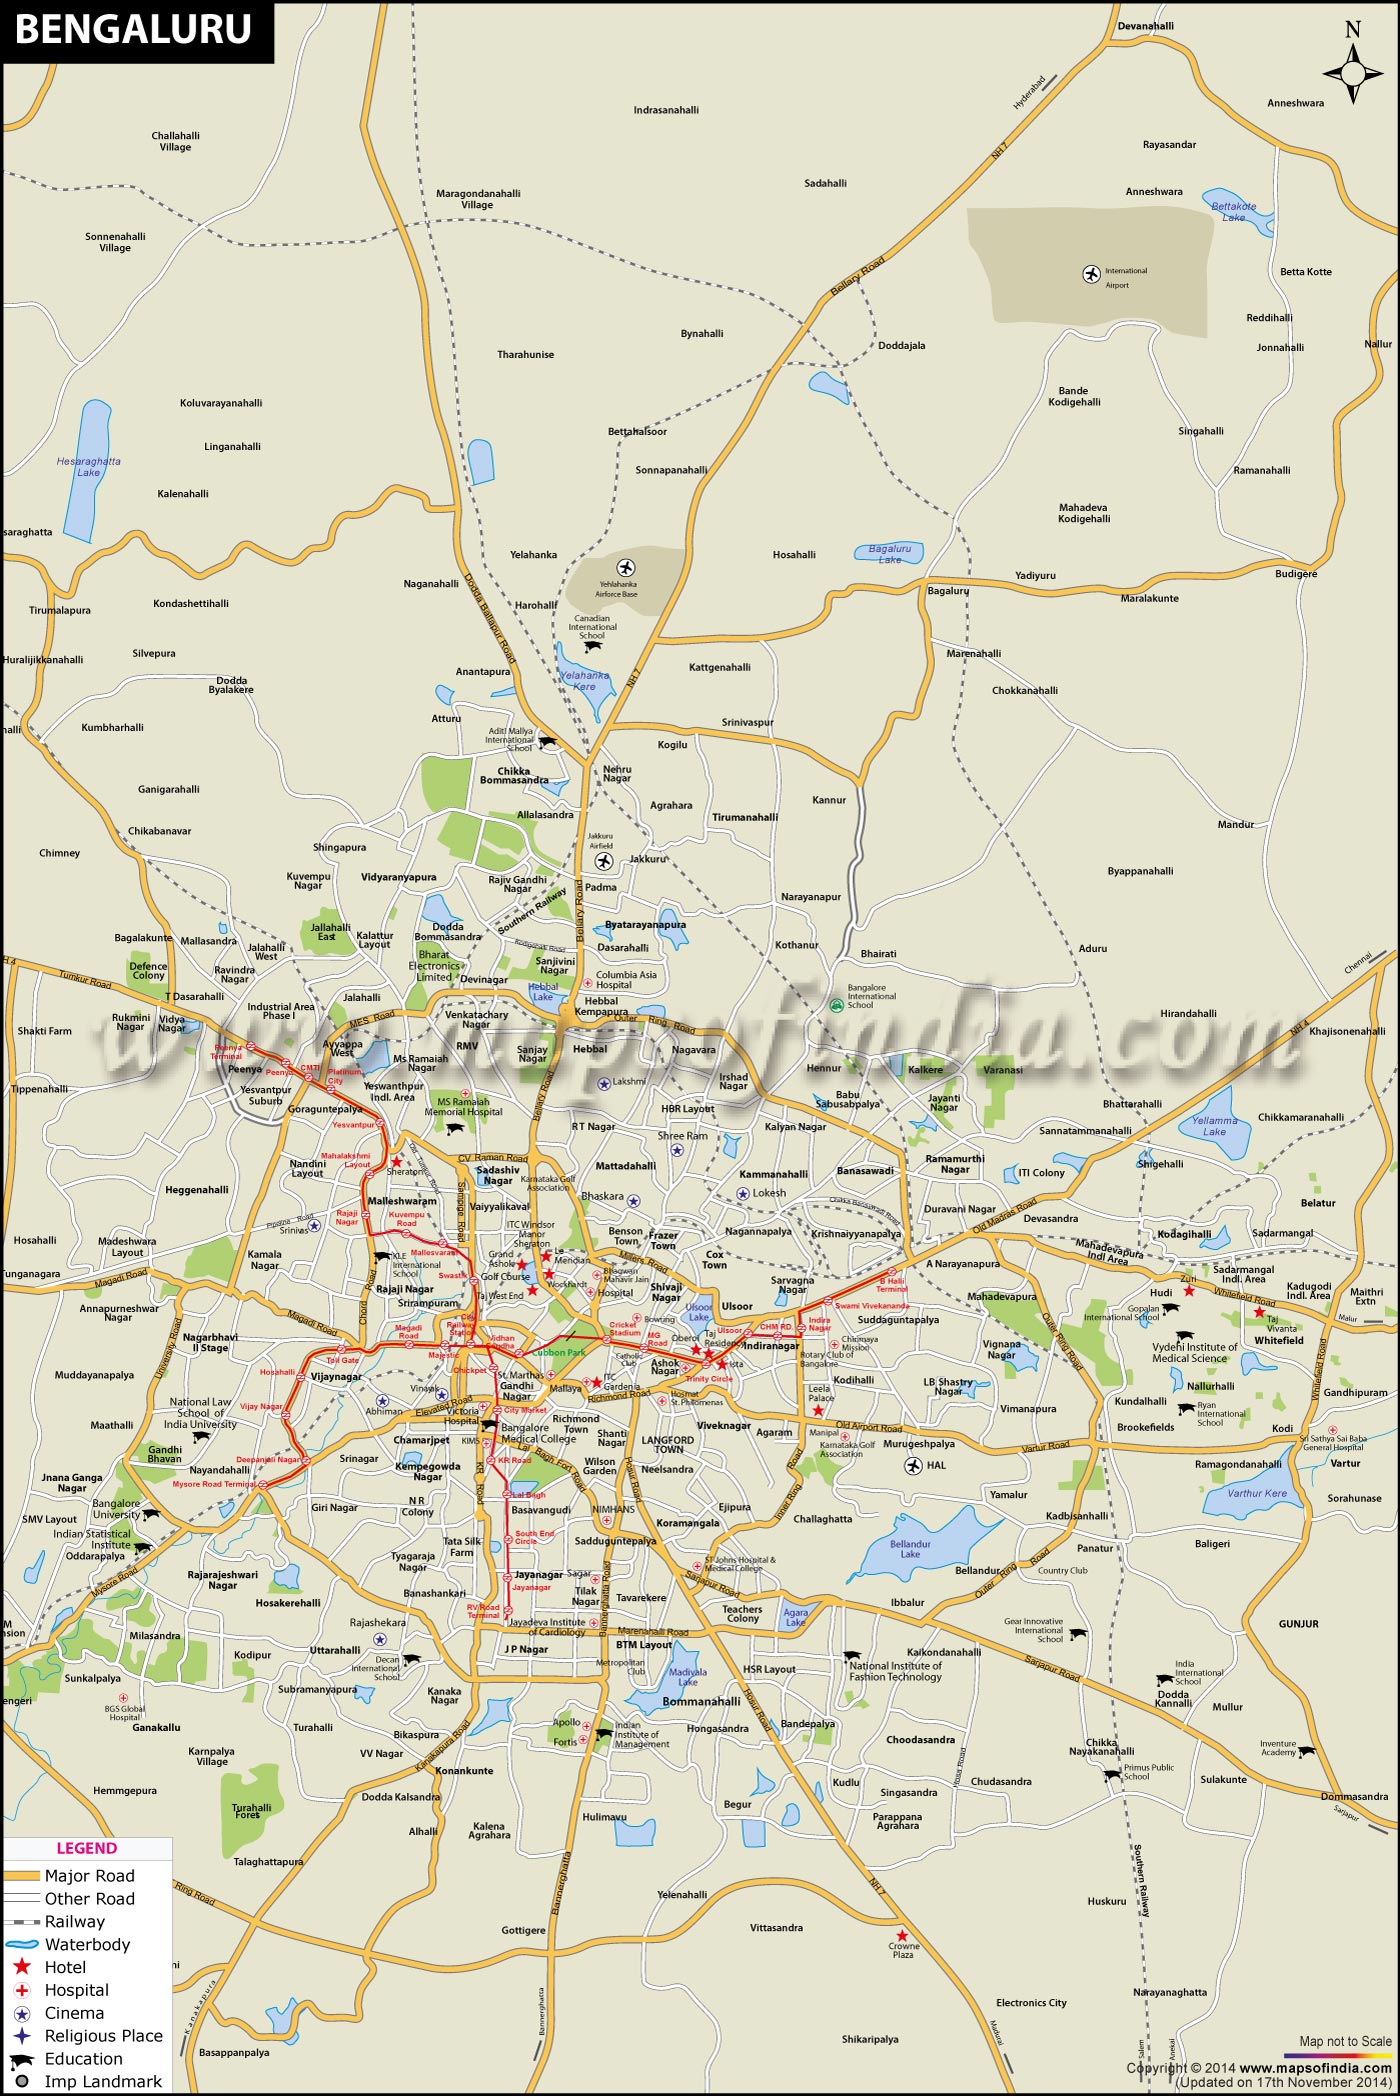 Bangalore Large City Map